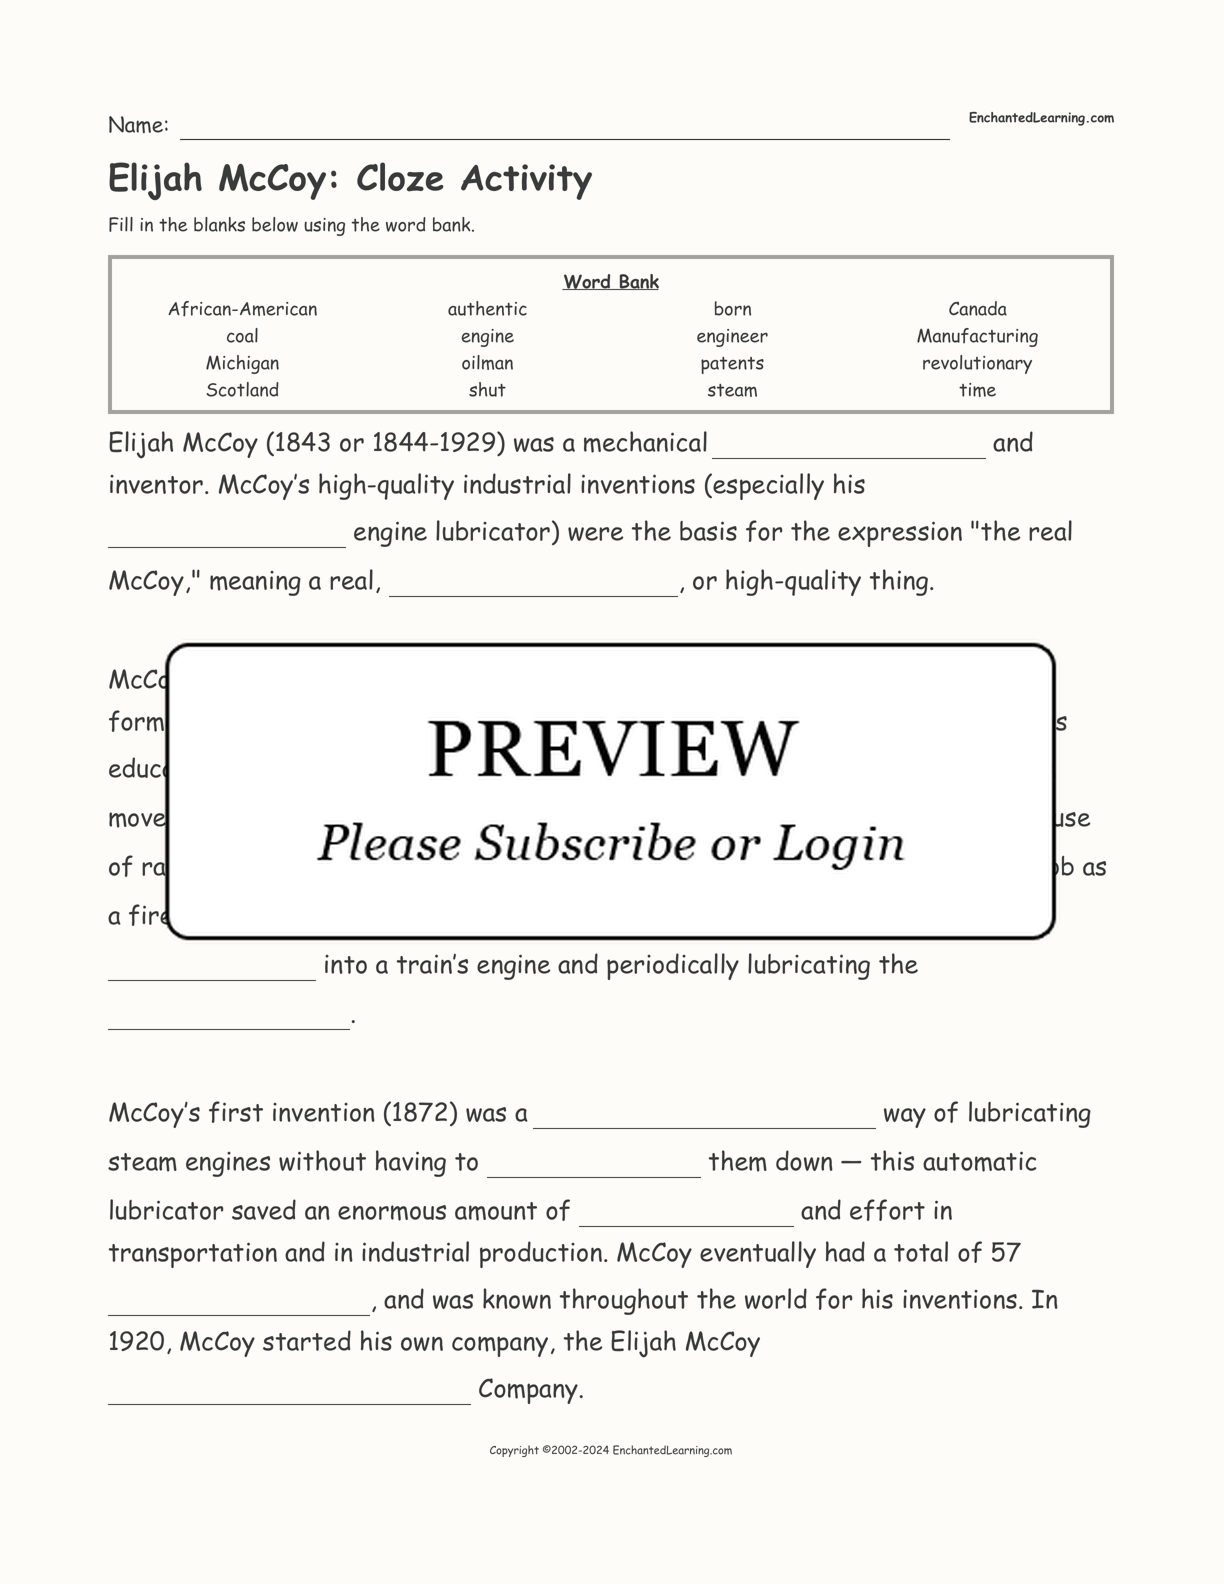 Elijah McCoy: Cloze Activity interactive worksheet page 1